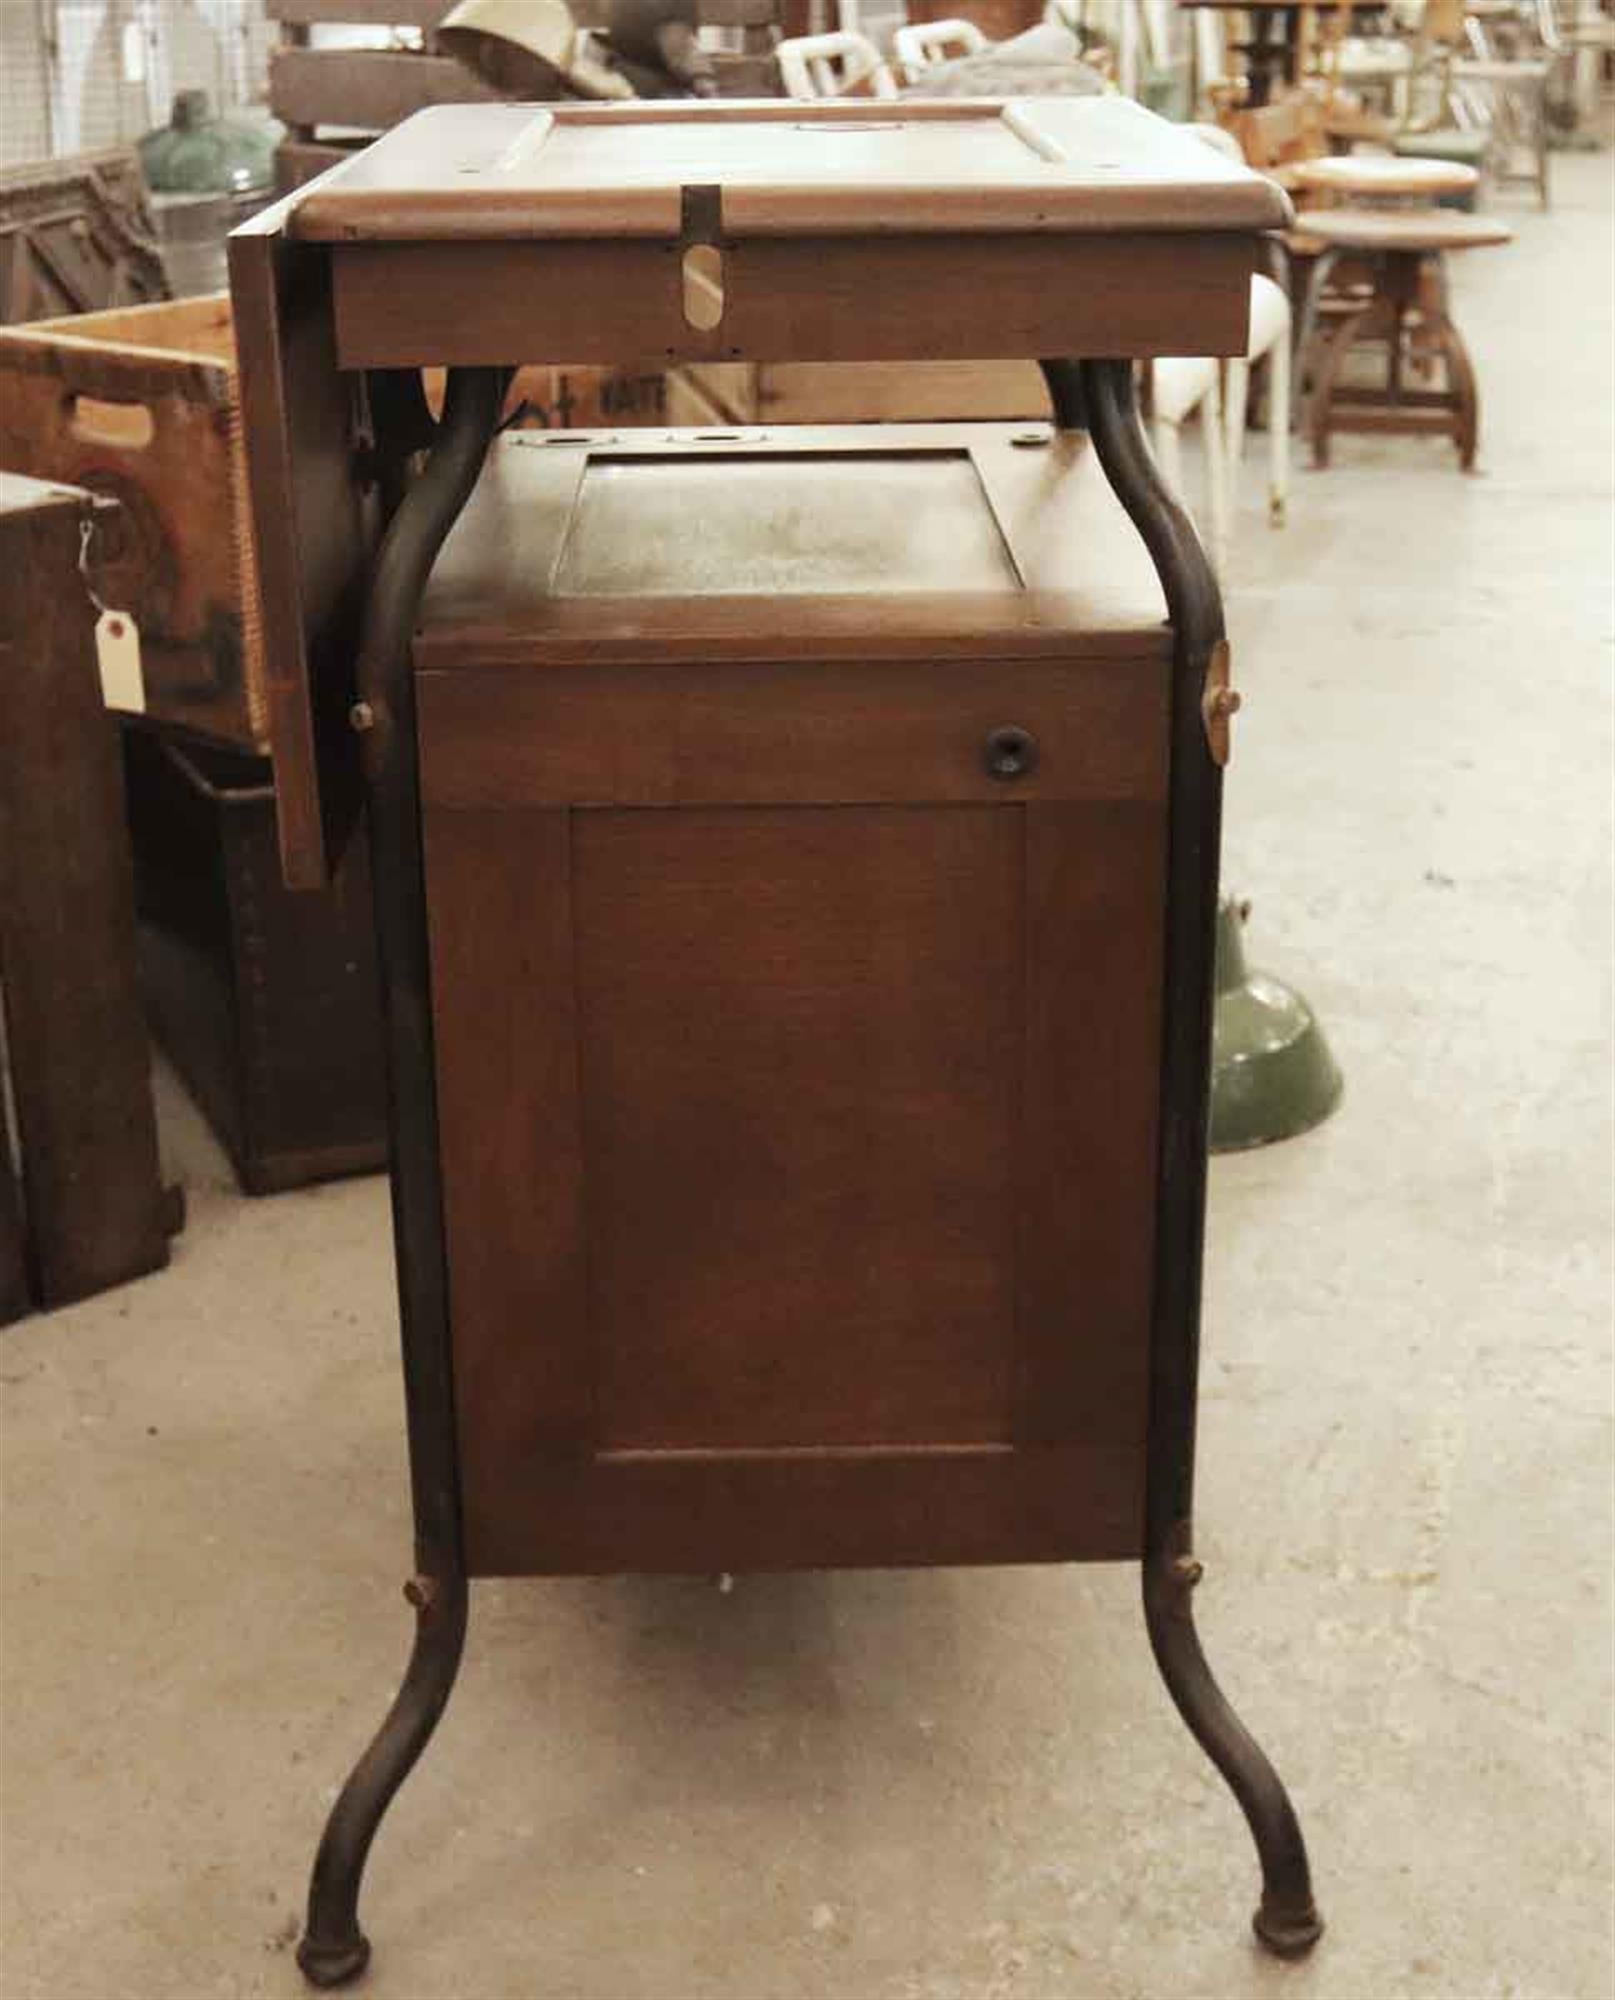 Industrial 1927 Unusual Wooden Cabinet for Gestetner Duplicator Machine from London England